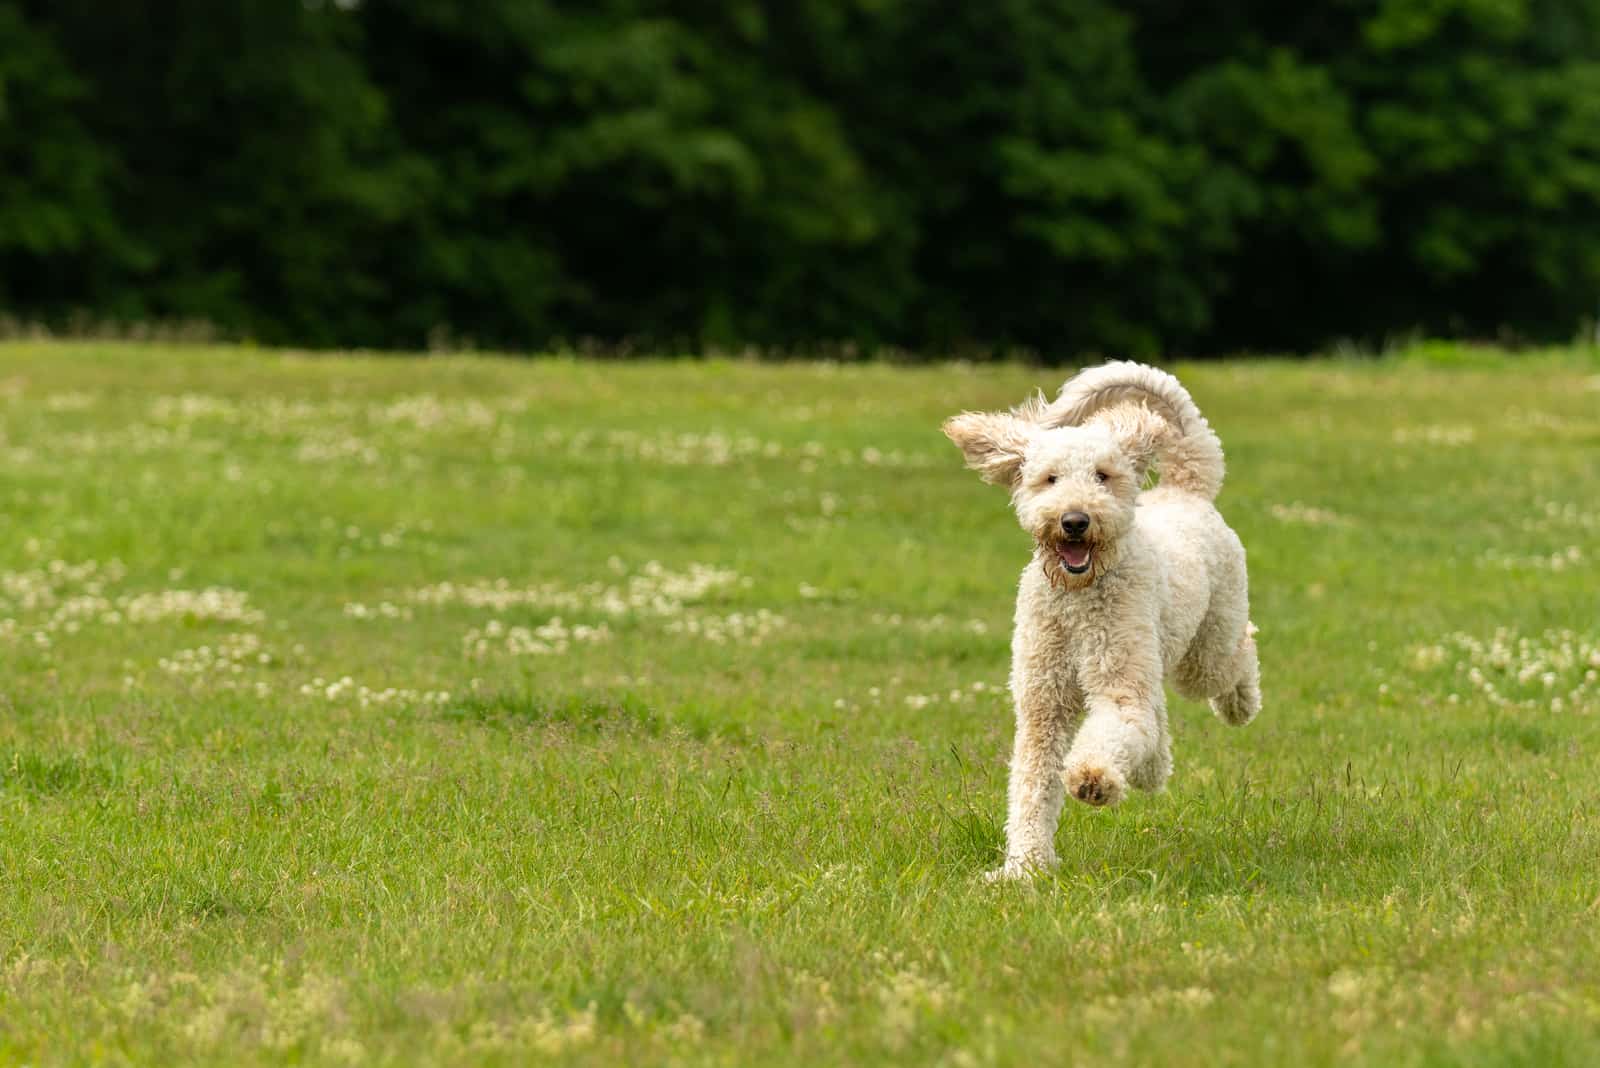 Cream Goldendoodle runs across the field